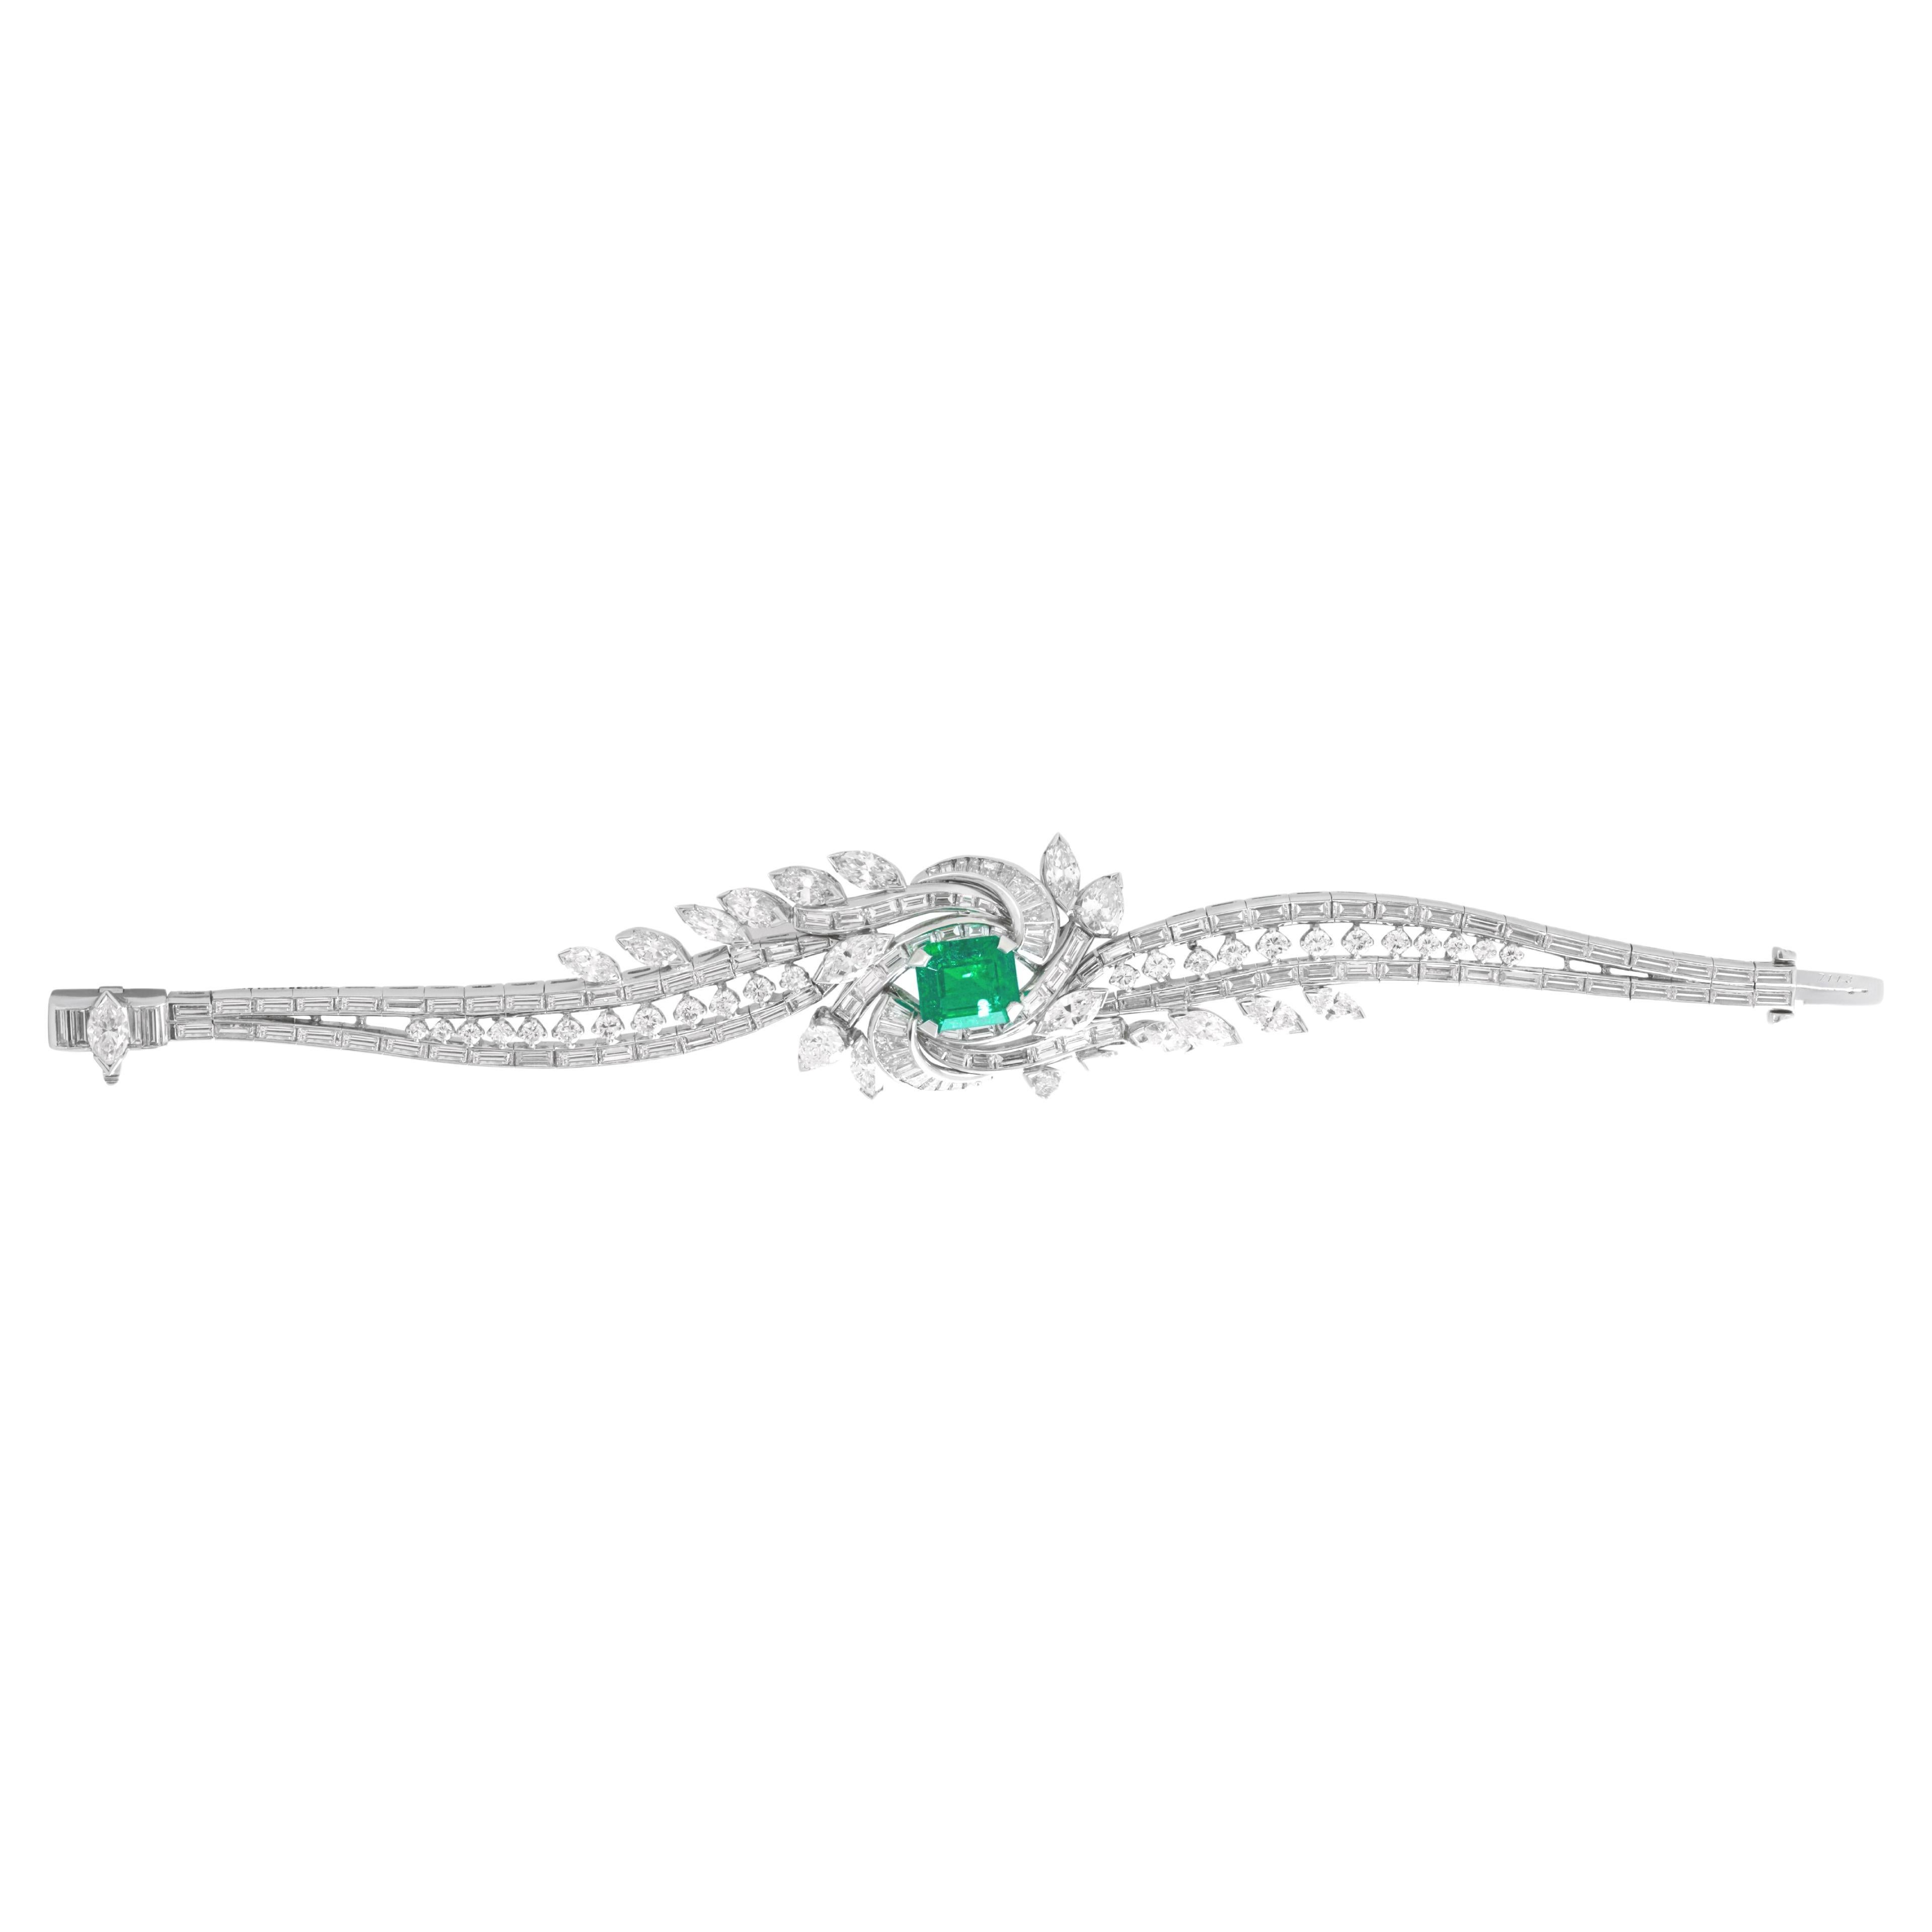  Diana M. 3.05 Carat Emerald and Diamond Platinum Whirlpool-Shaped Bracelet For Sale